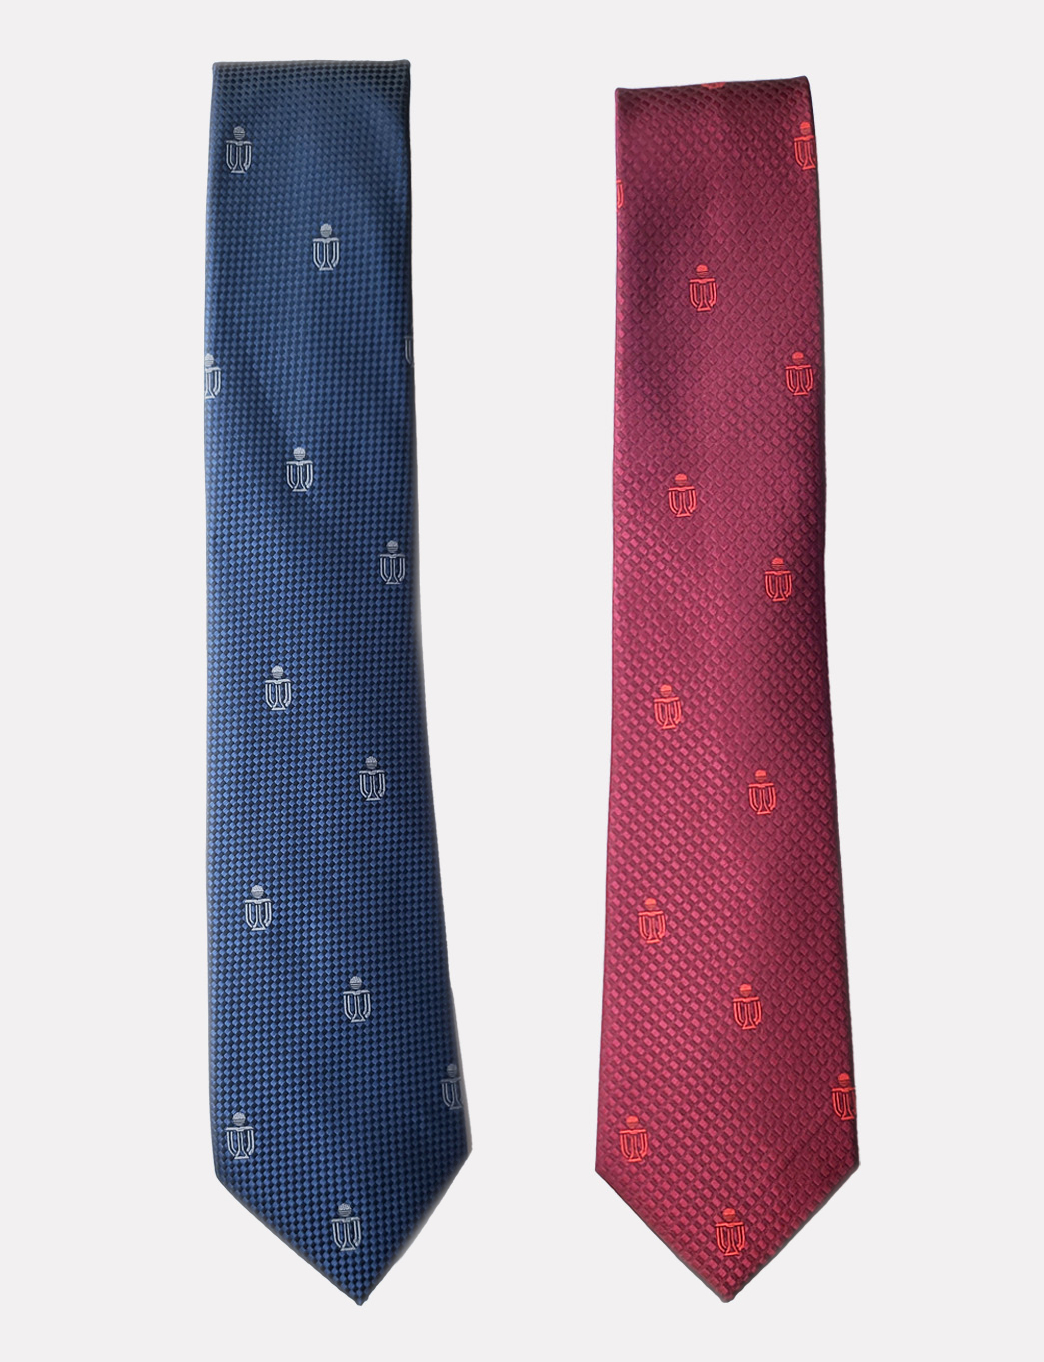 HKUST Logomark Tie (Navy / Red)